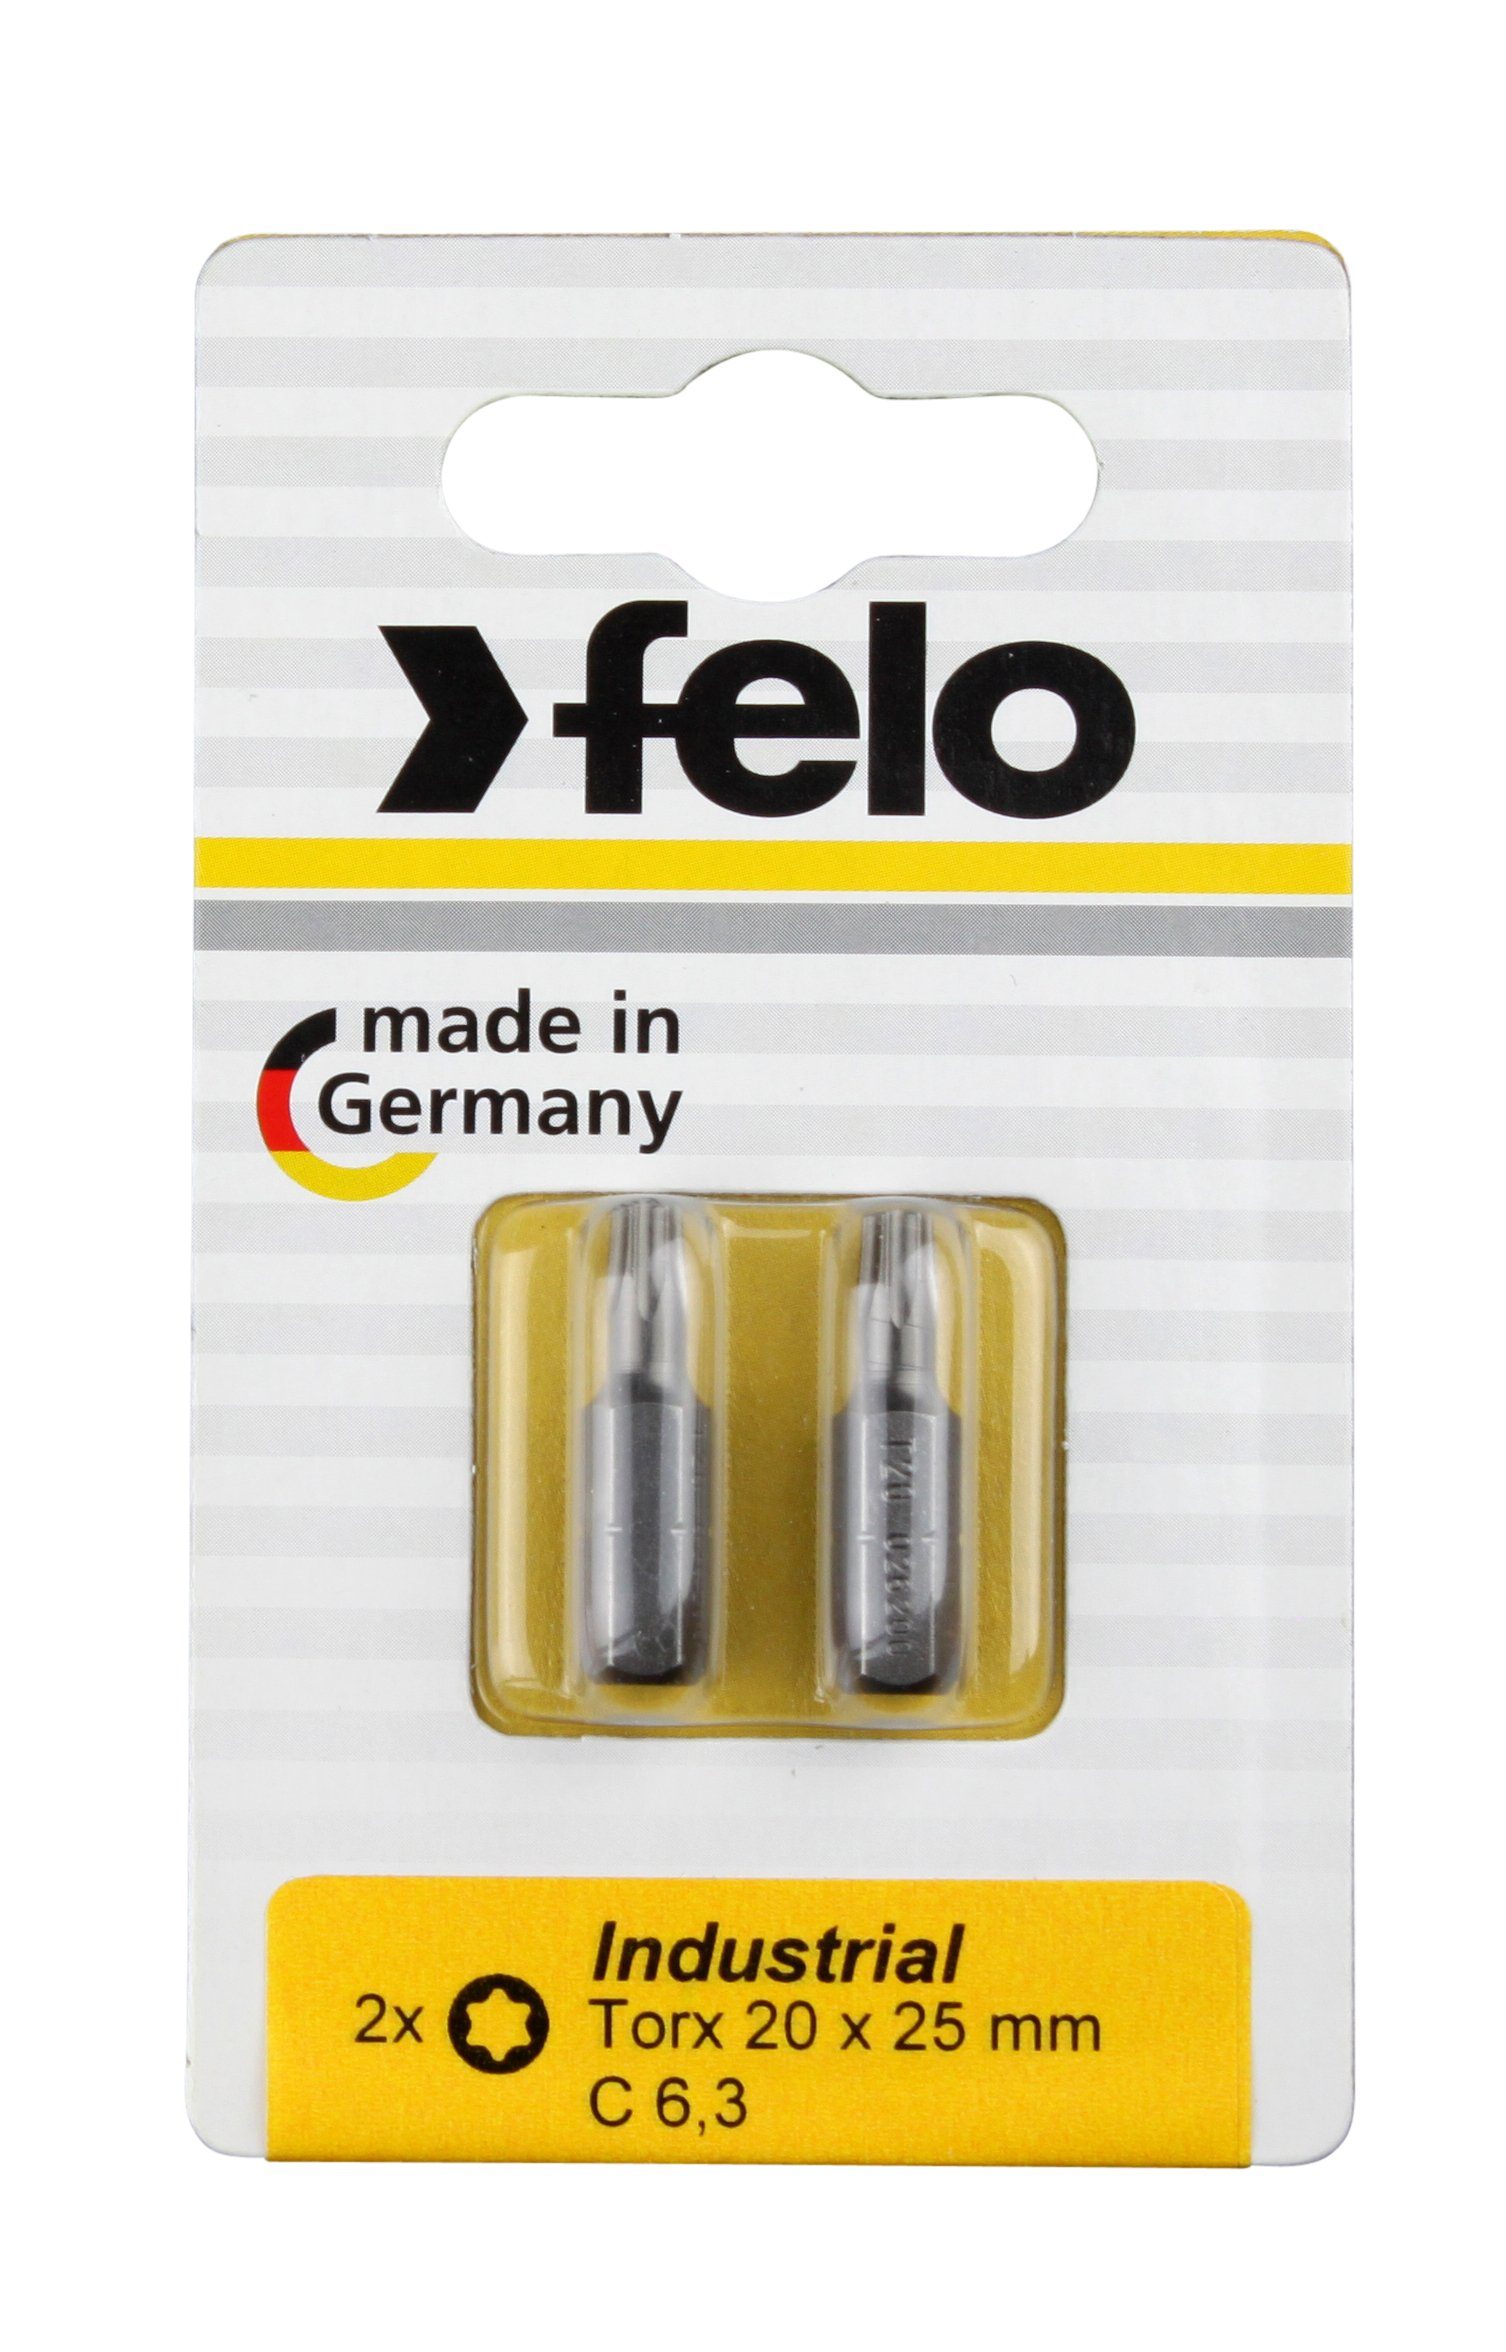 Felo Torx-Bit Felo Bit, Industrie C 6,3 x 25mm, 2 Stk auf Karte 2x Tx 20